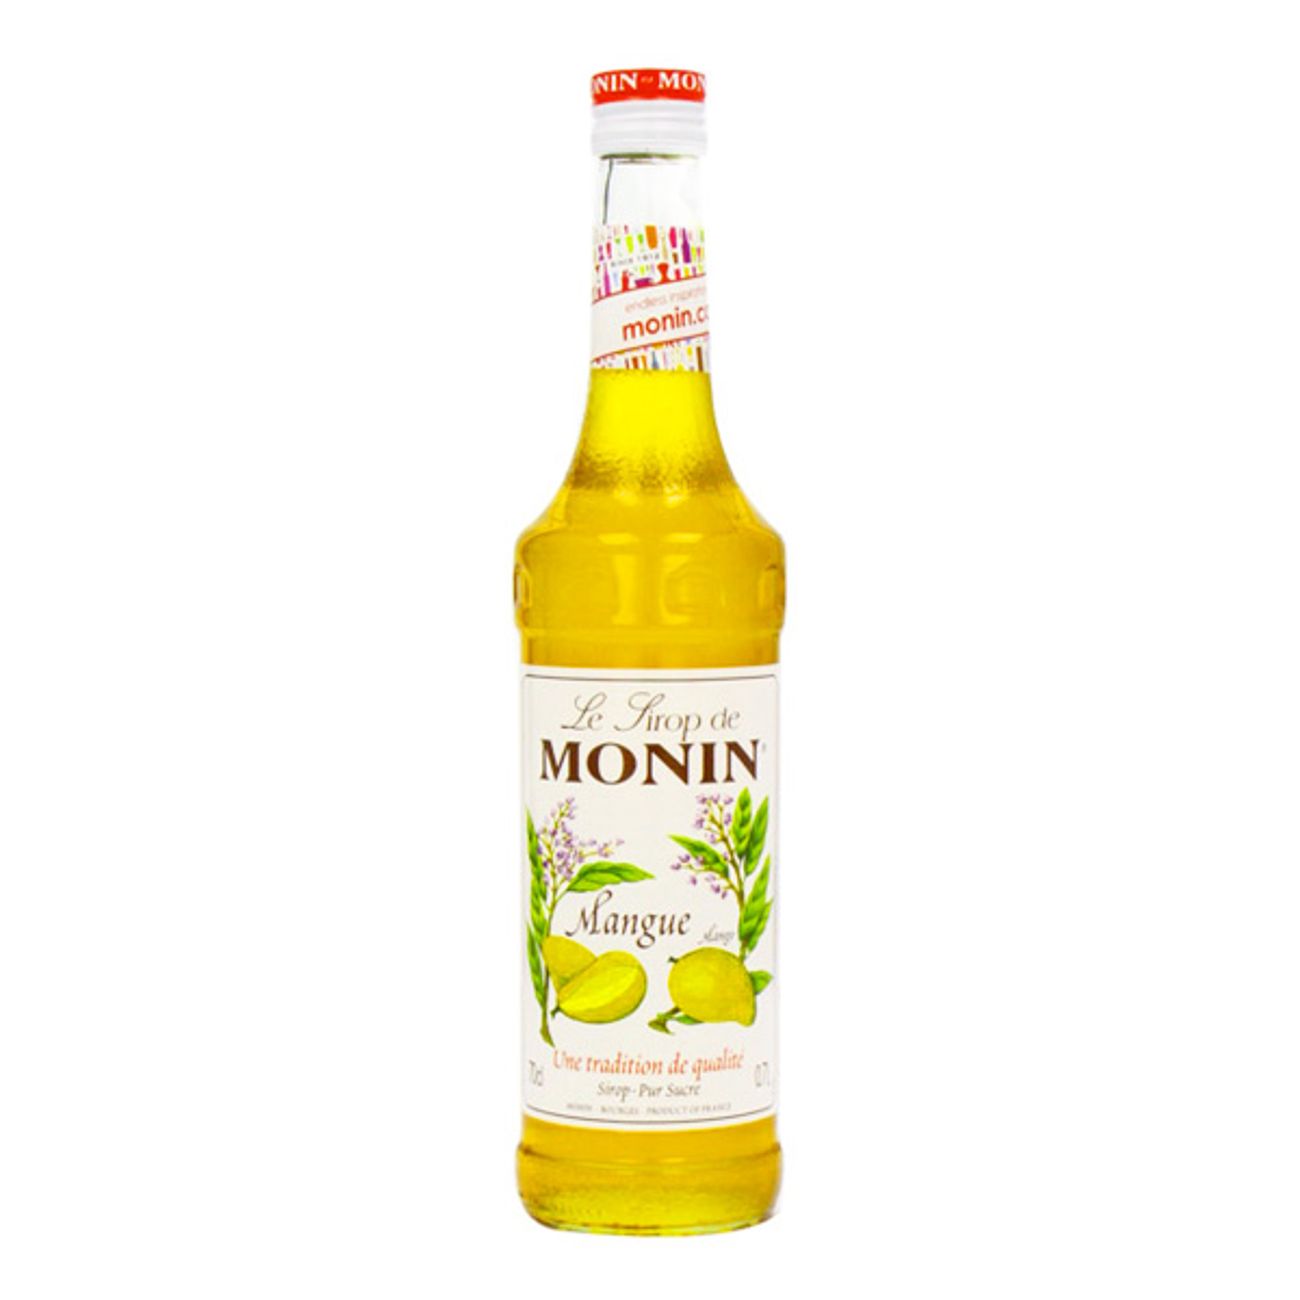 monin-mango-drinkmix-1